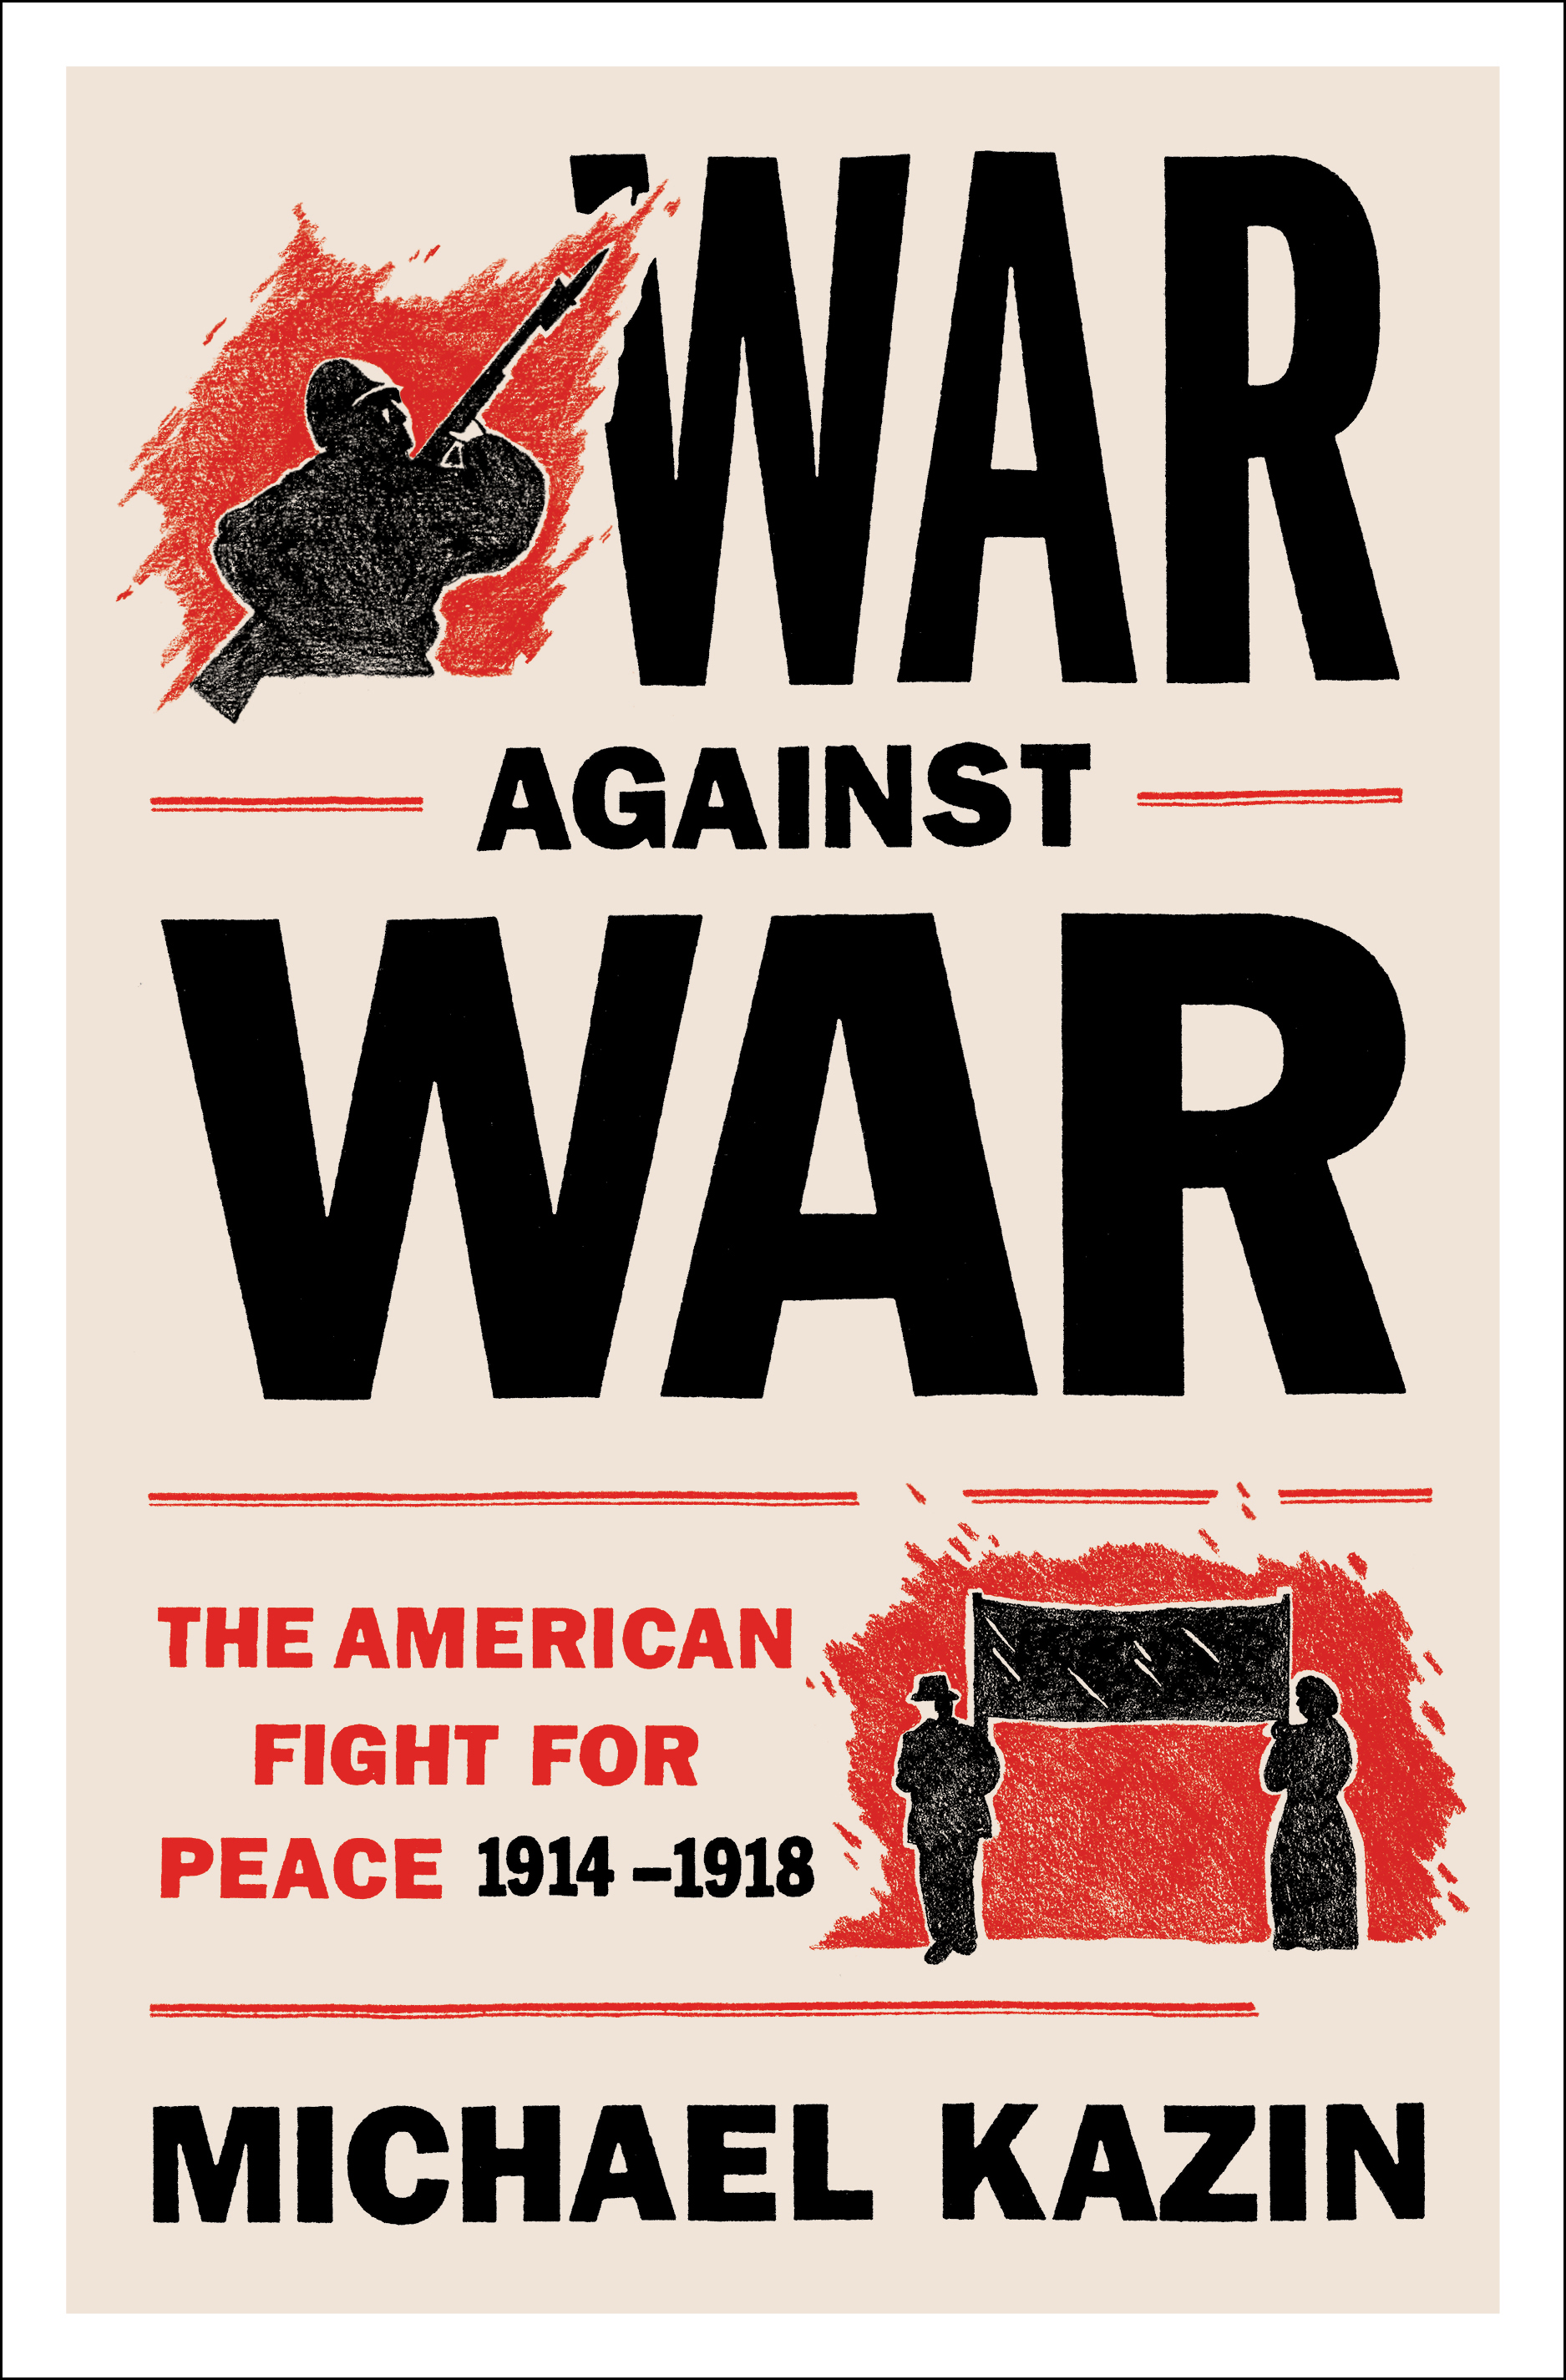 "War Against War" by Michael Kazin